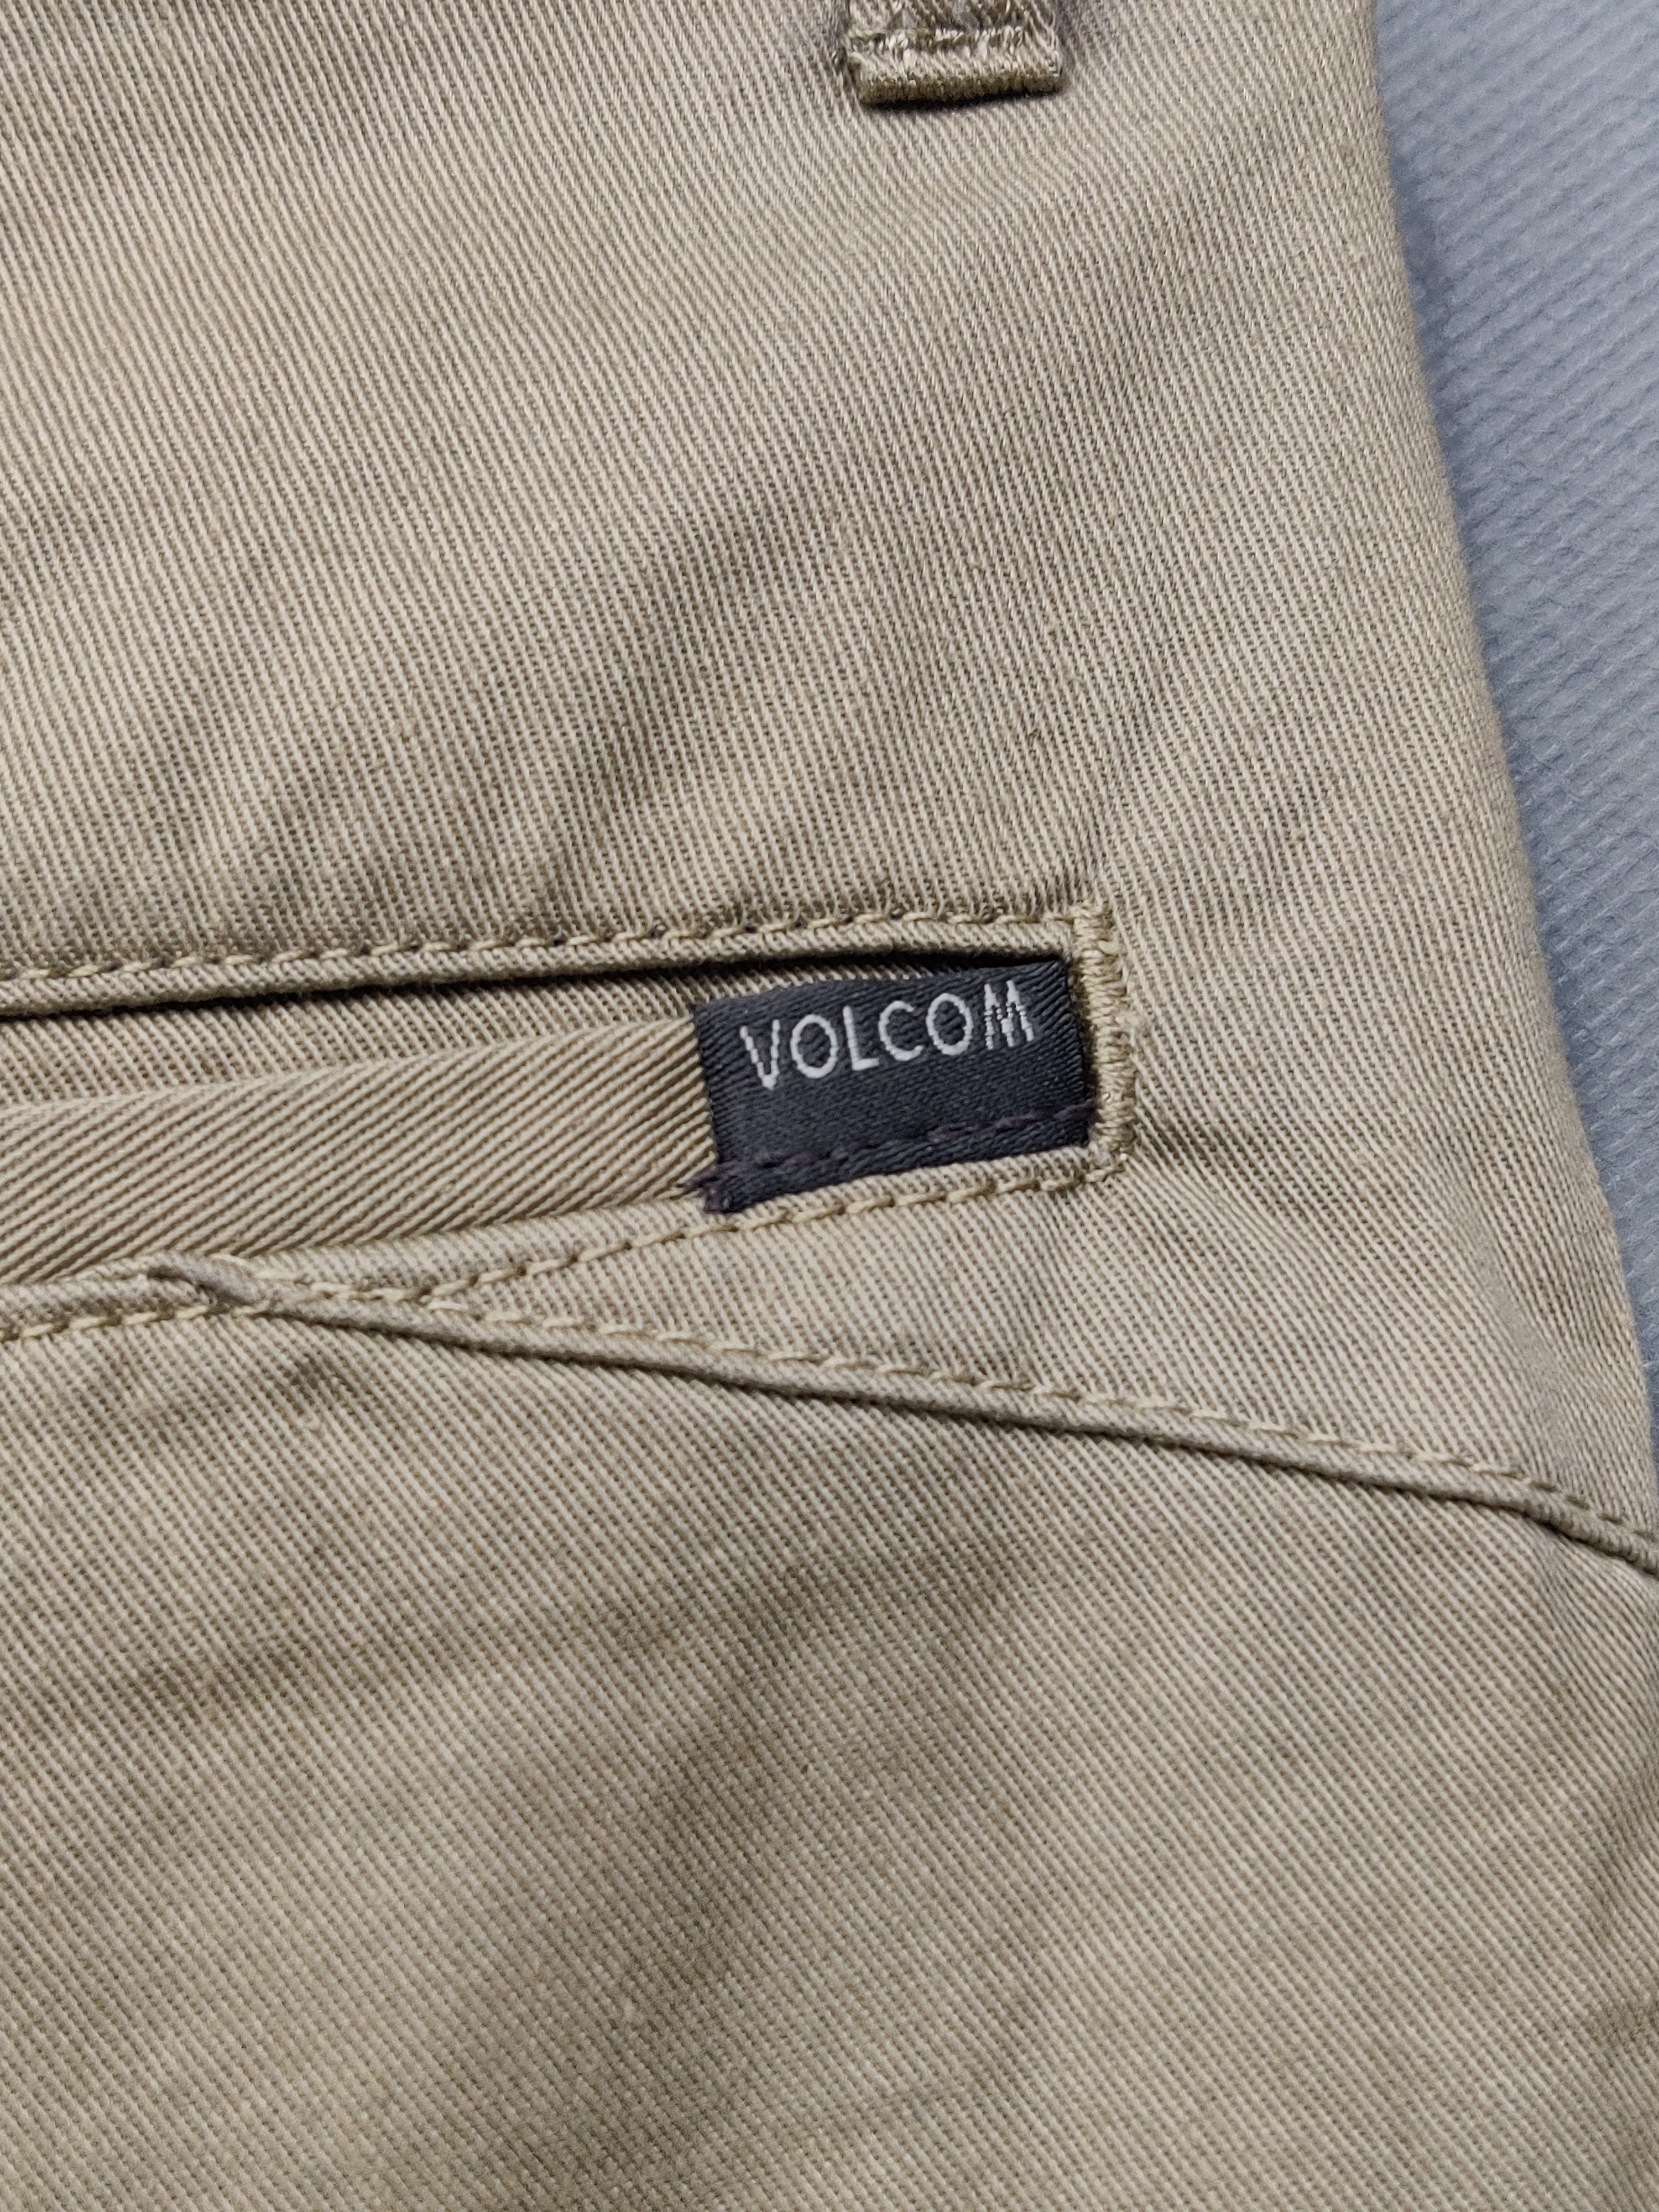 Volcom Branded Original Cotton Short For Men